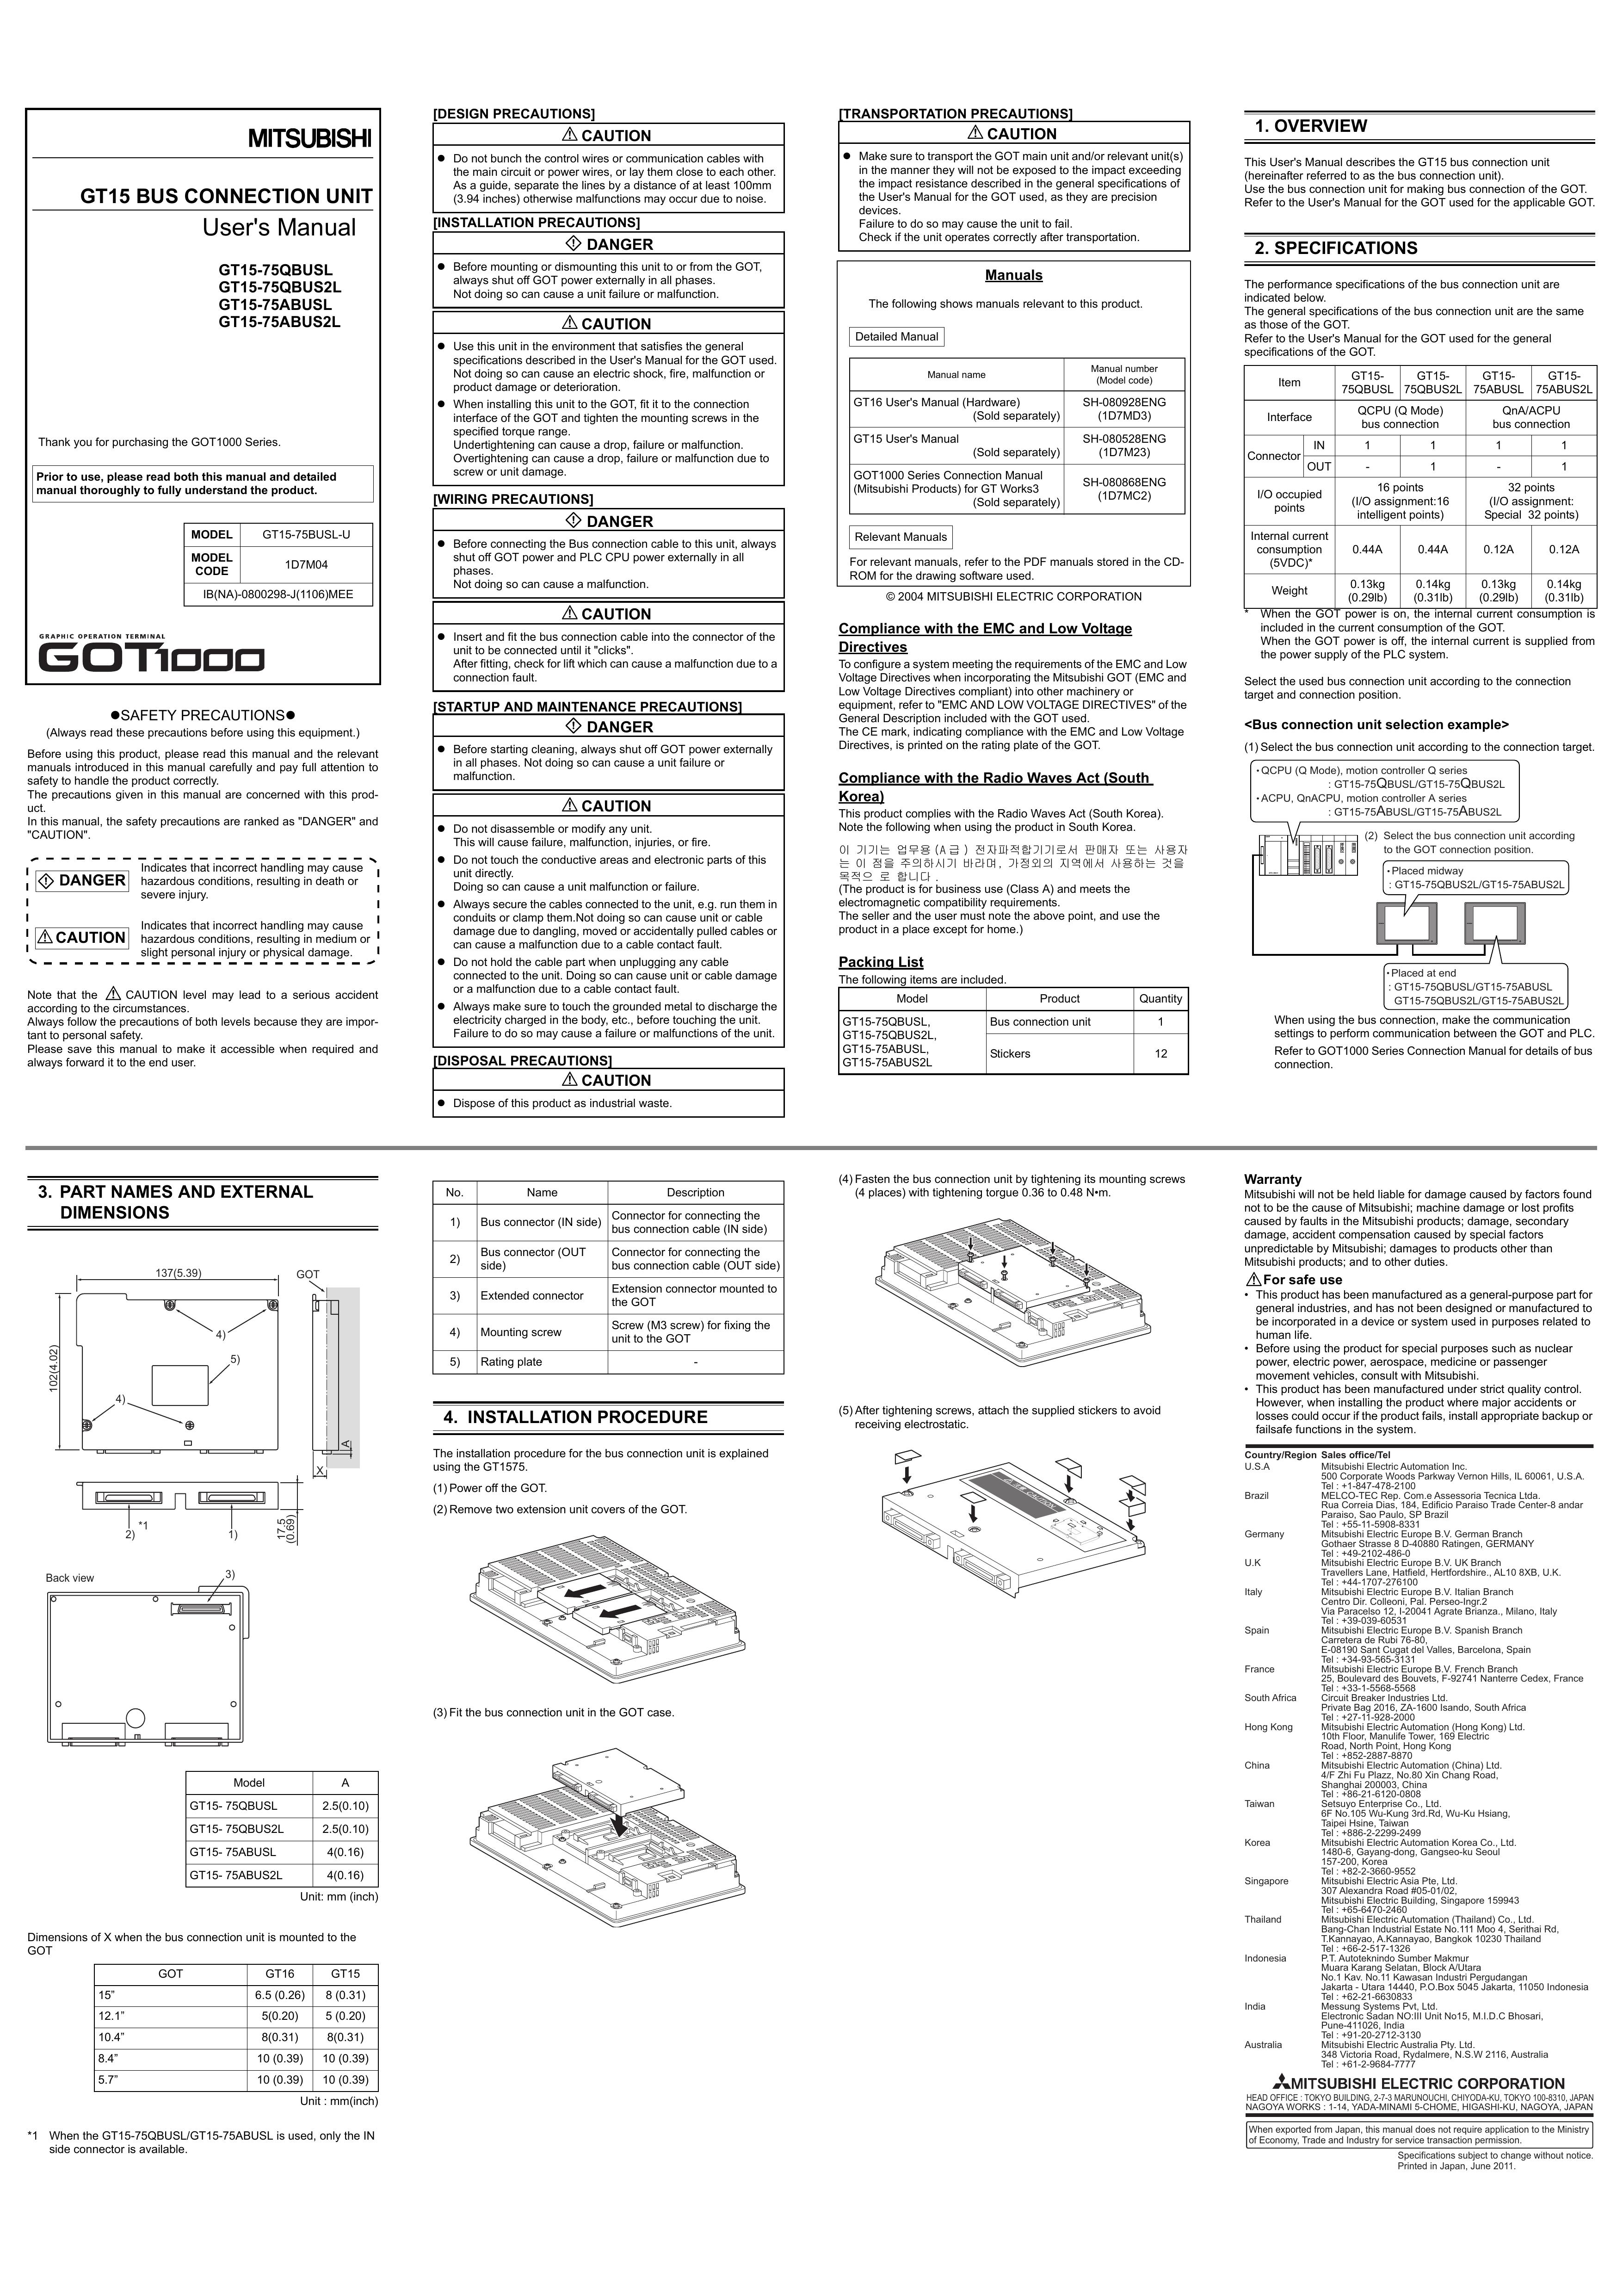 Mitsubishi Electronics GT15-75QBUSL Insect Control Equipment User Manual